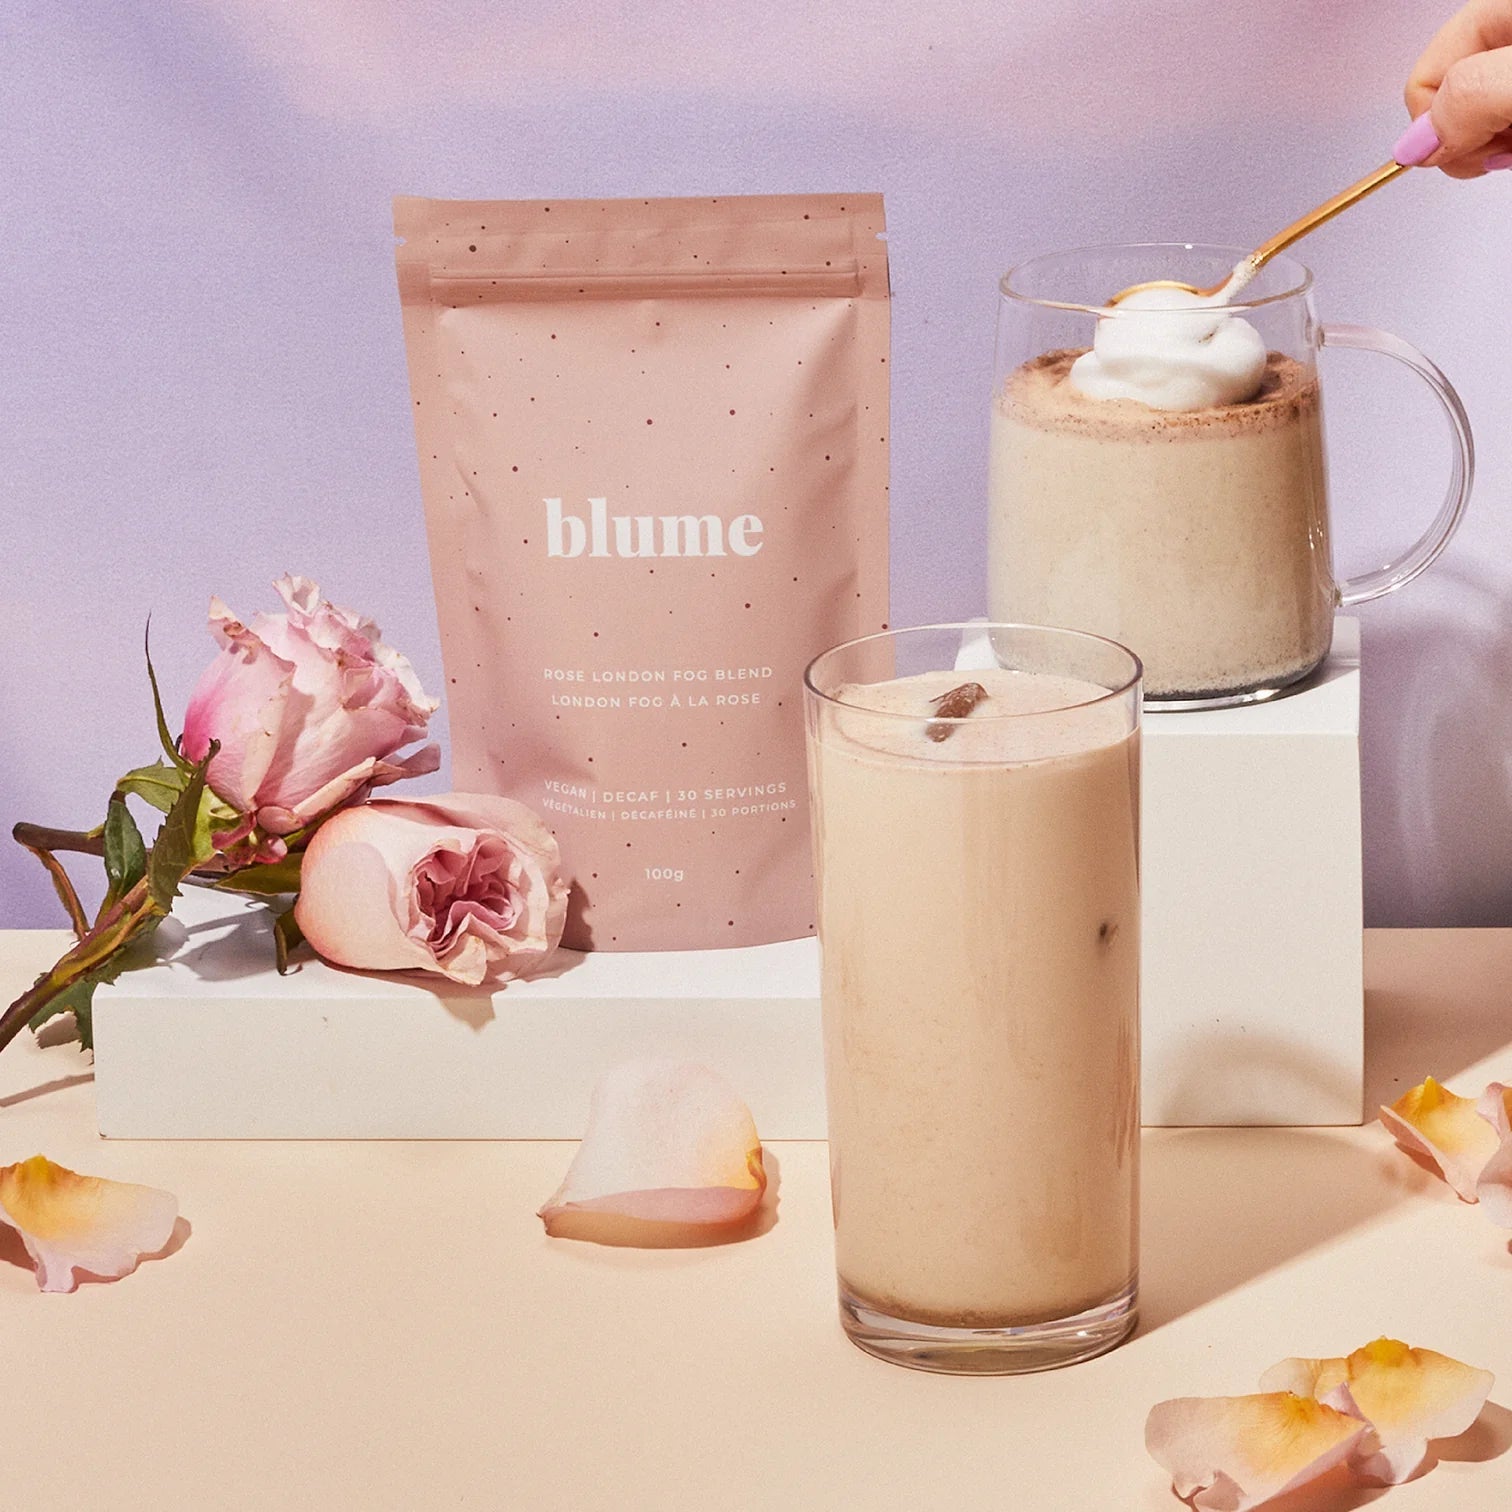 Rose London Fog Blend - Superfood Latte Powder - 100 grams - Oonnie - Blume